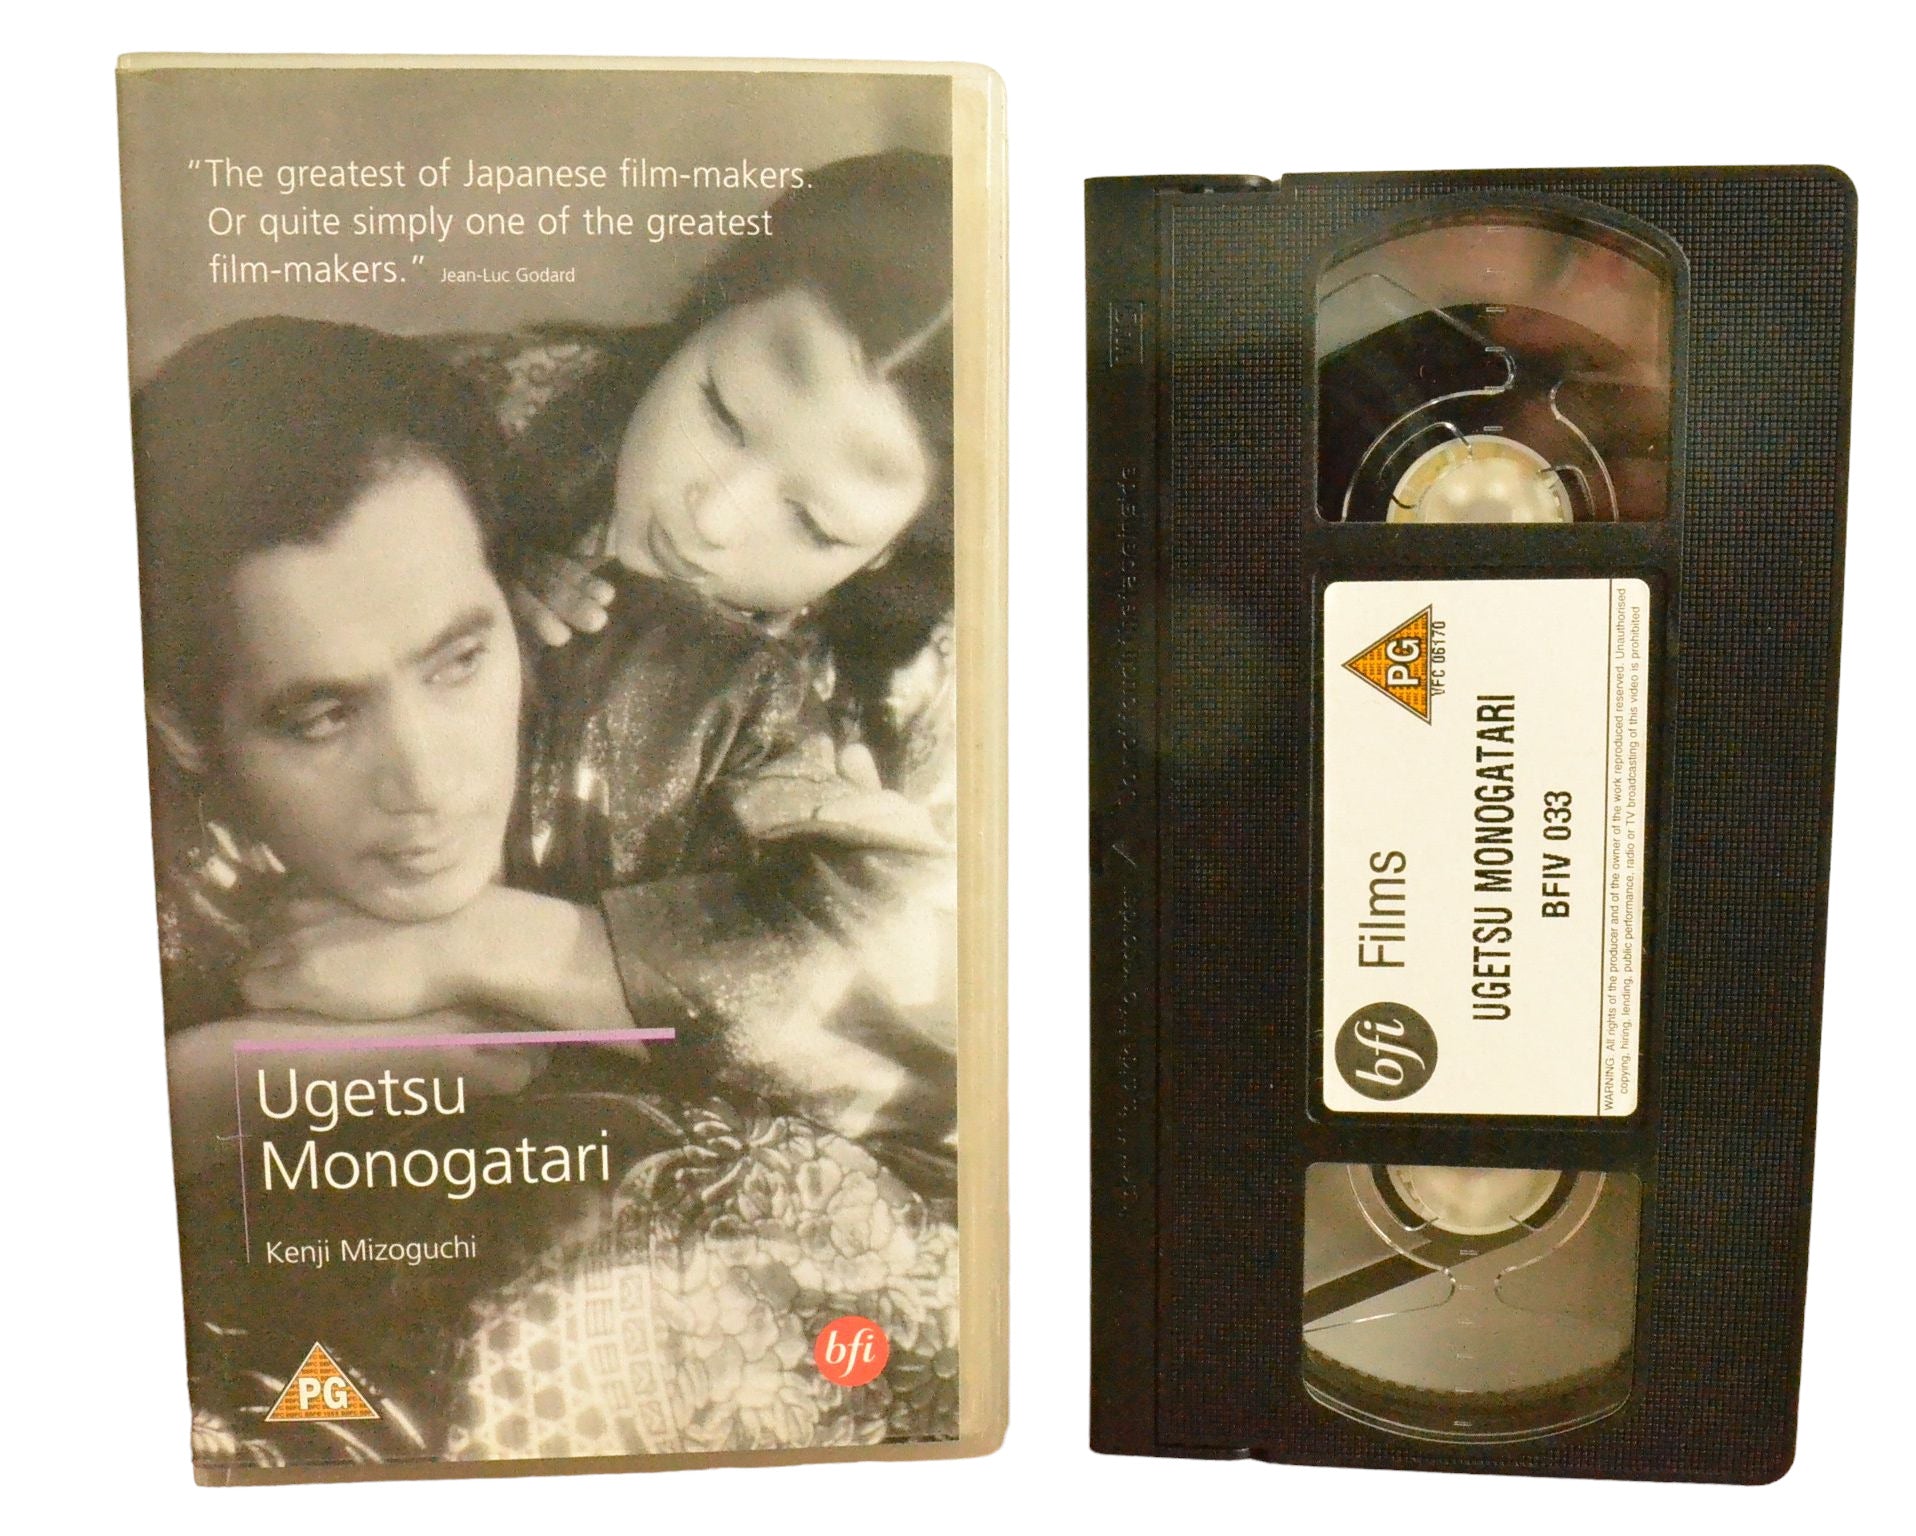 Ugestu Monogatari - Masayuki Mori - BFI Films - BFIV033 - Drama - Pal - VHS-